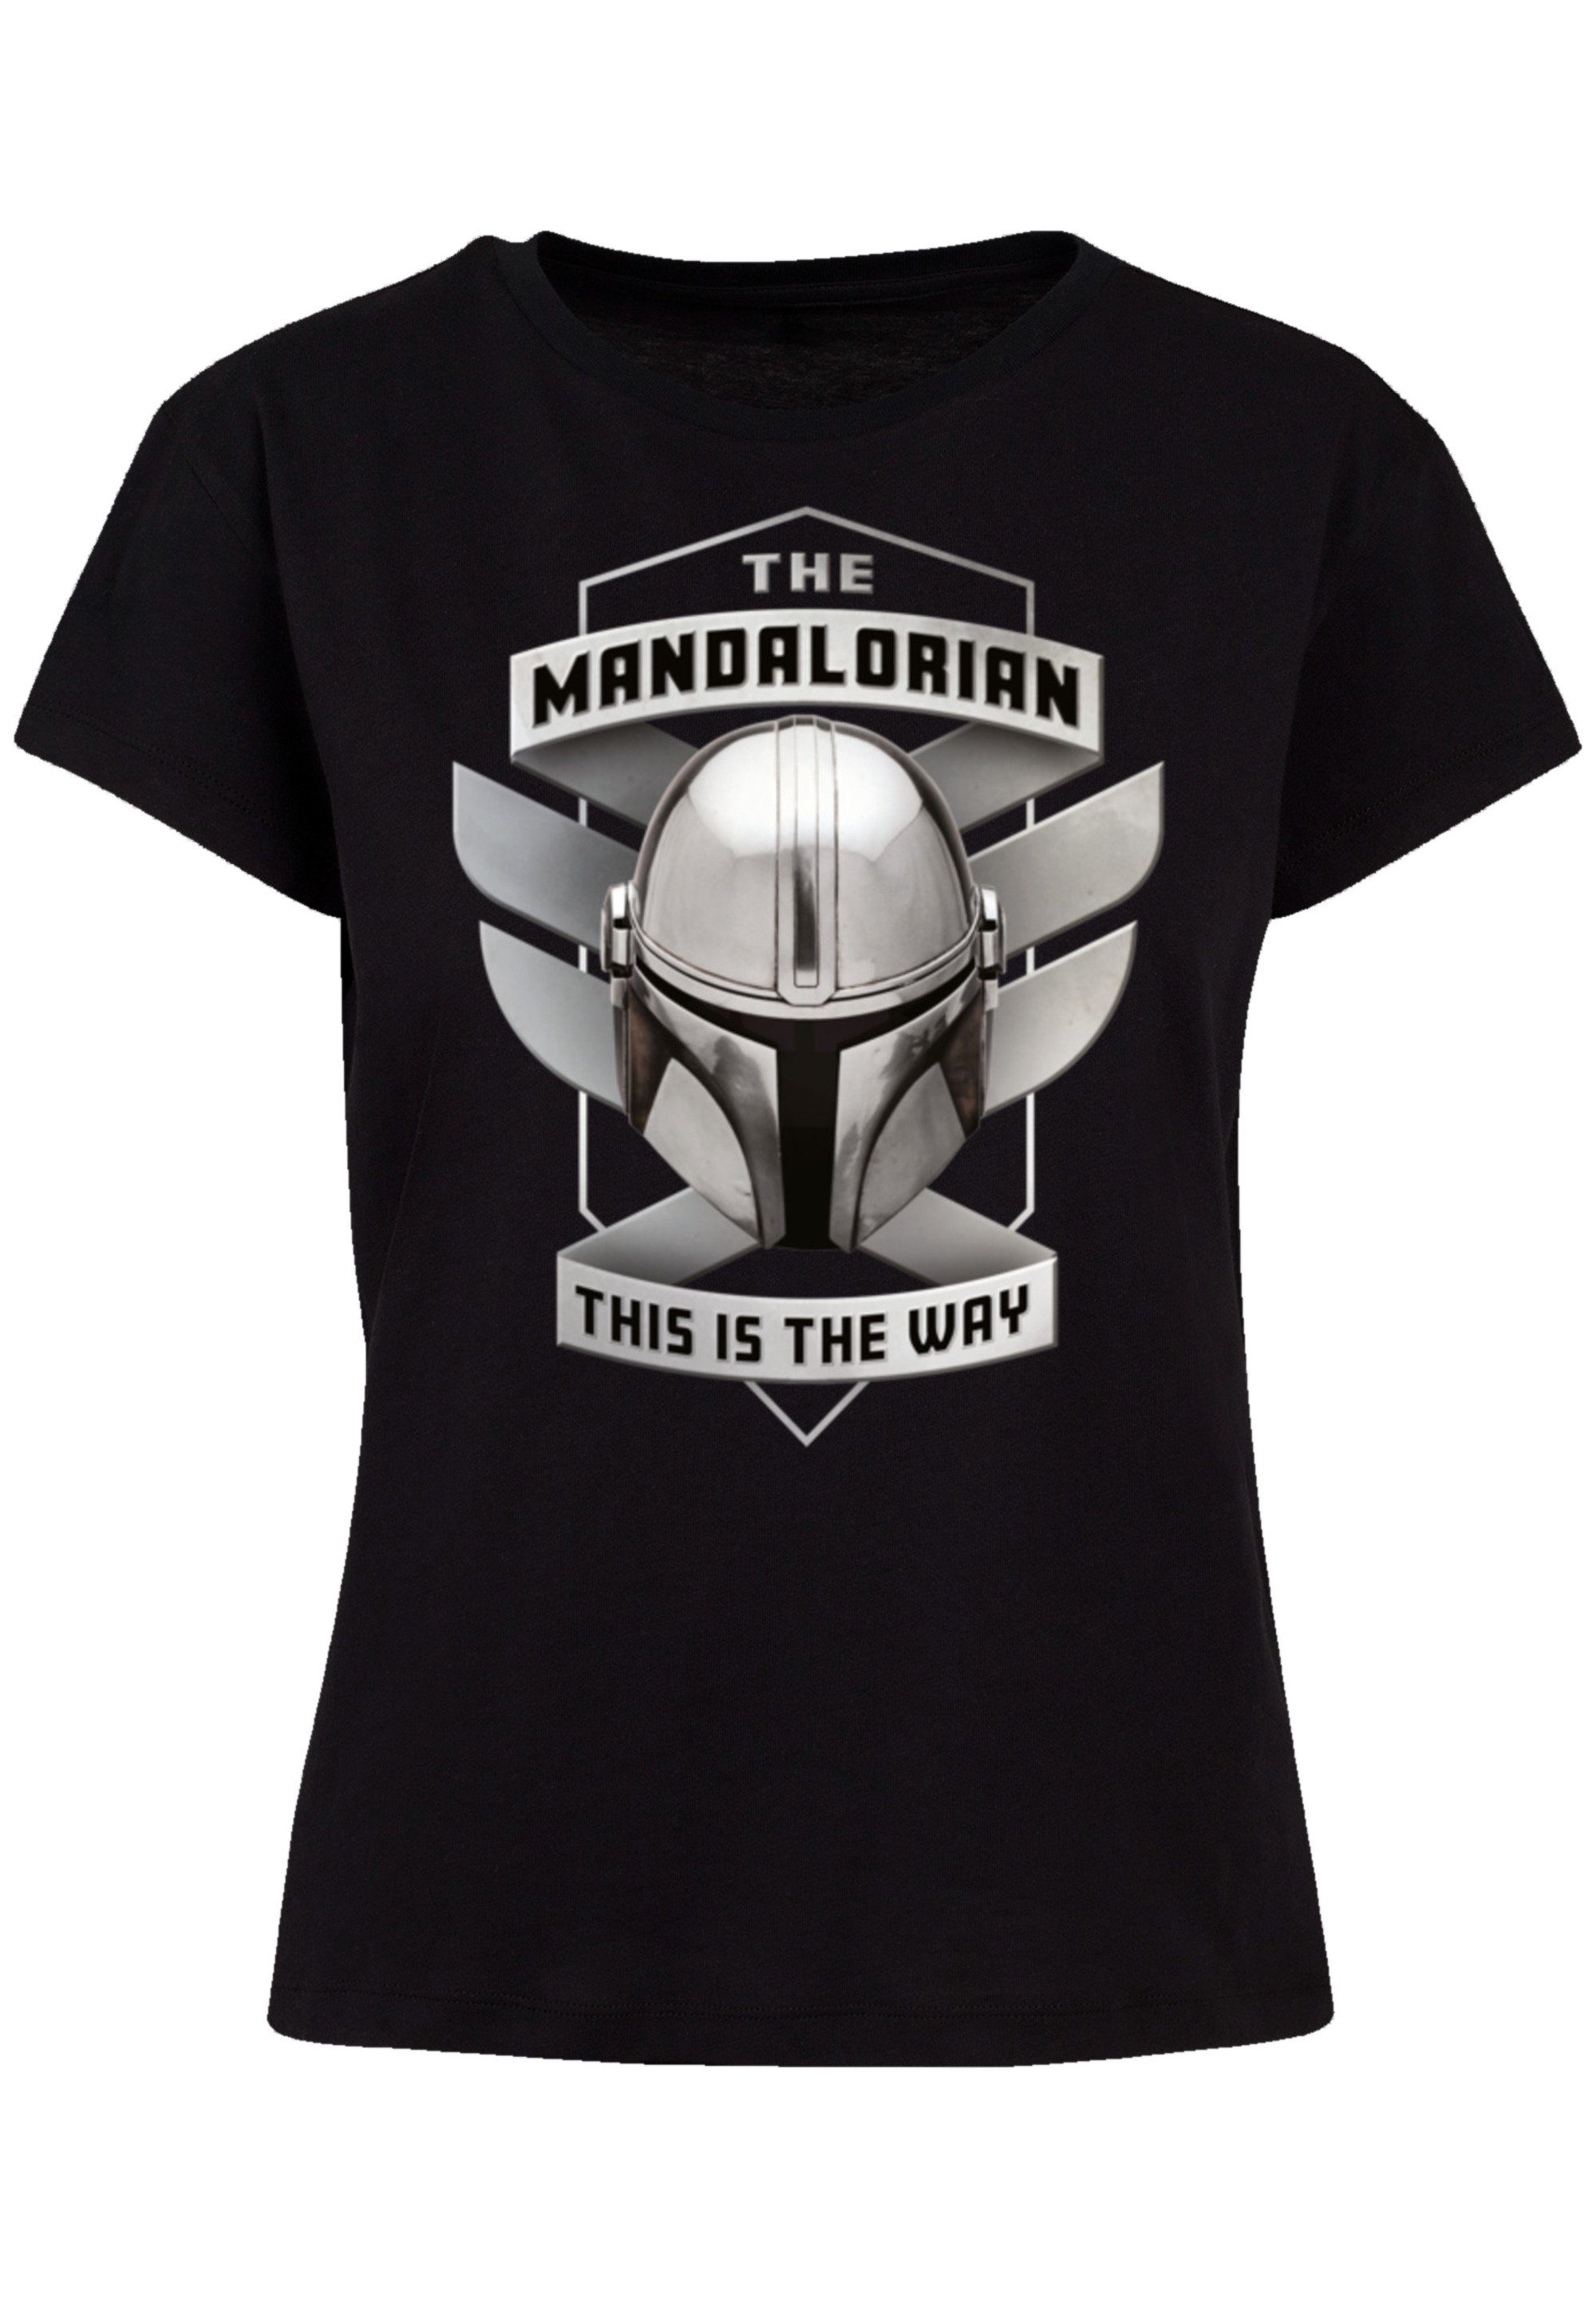 The Way Is Mandalorian Premium This Wars The F4NT4STIC Qualität T-Shirt Star